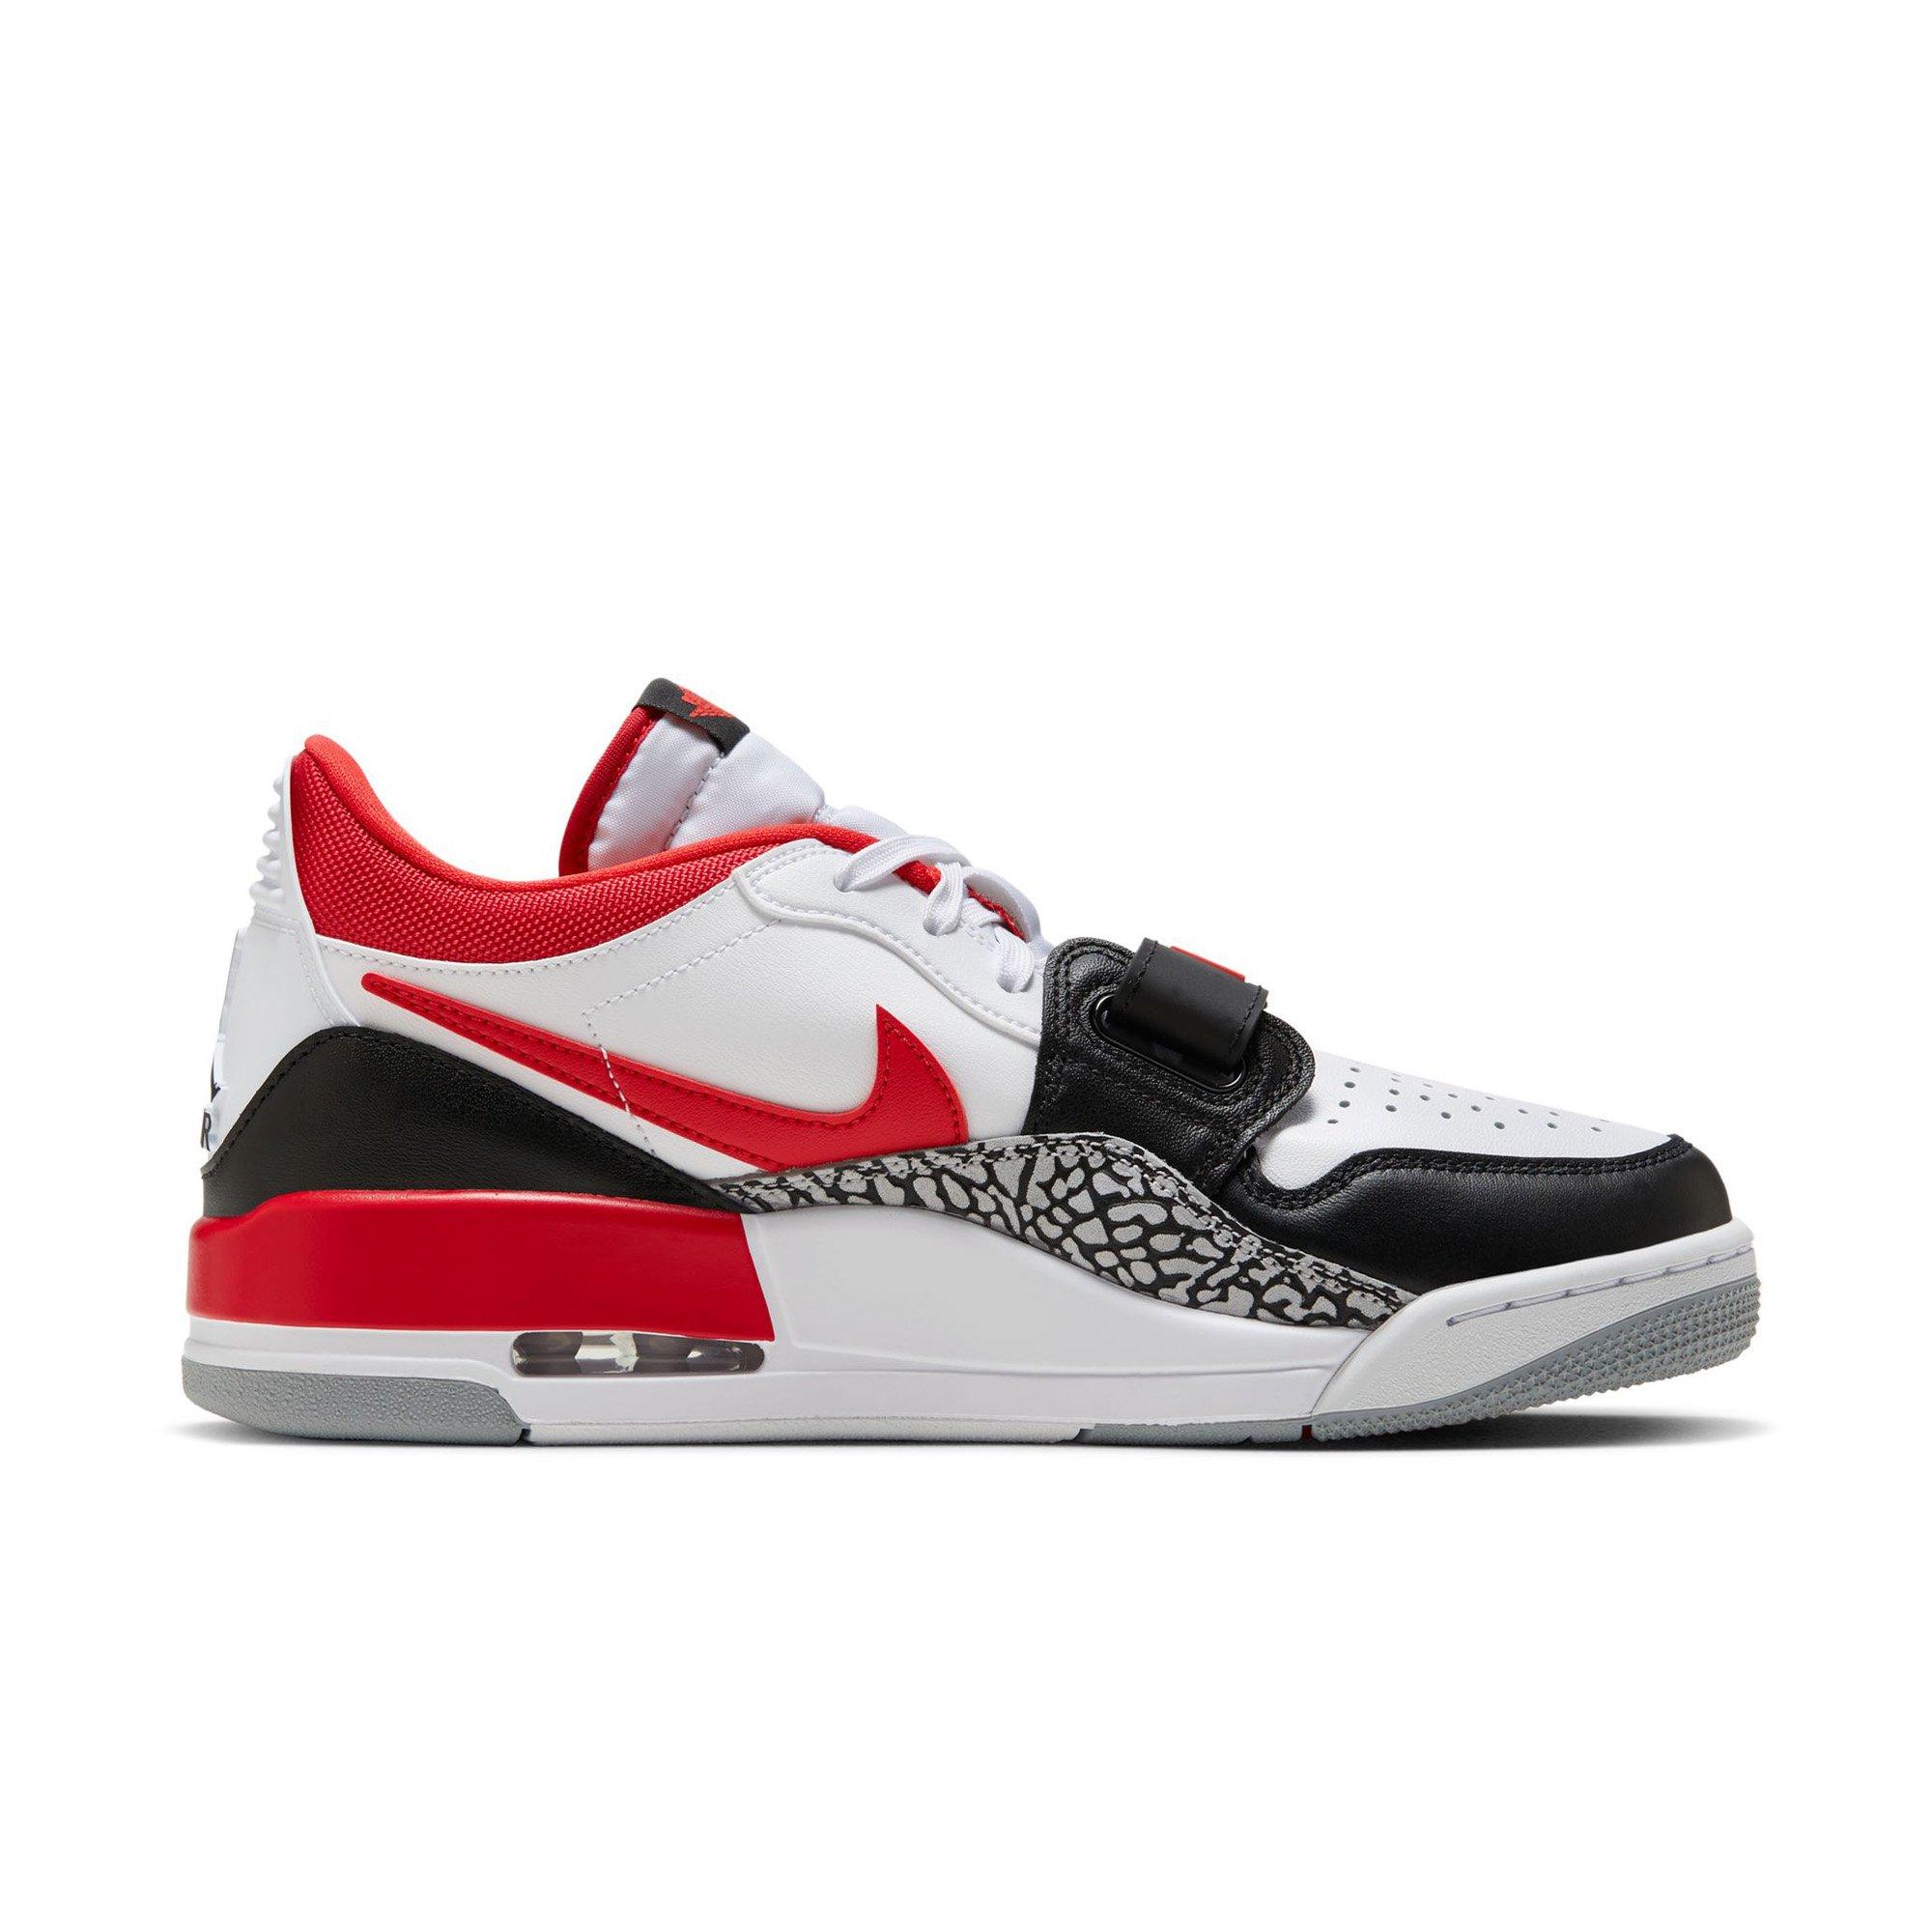 Jordan Legacy 312 Low White/Fire Red/Black/Wolf Grey Men's Shoe